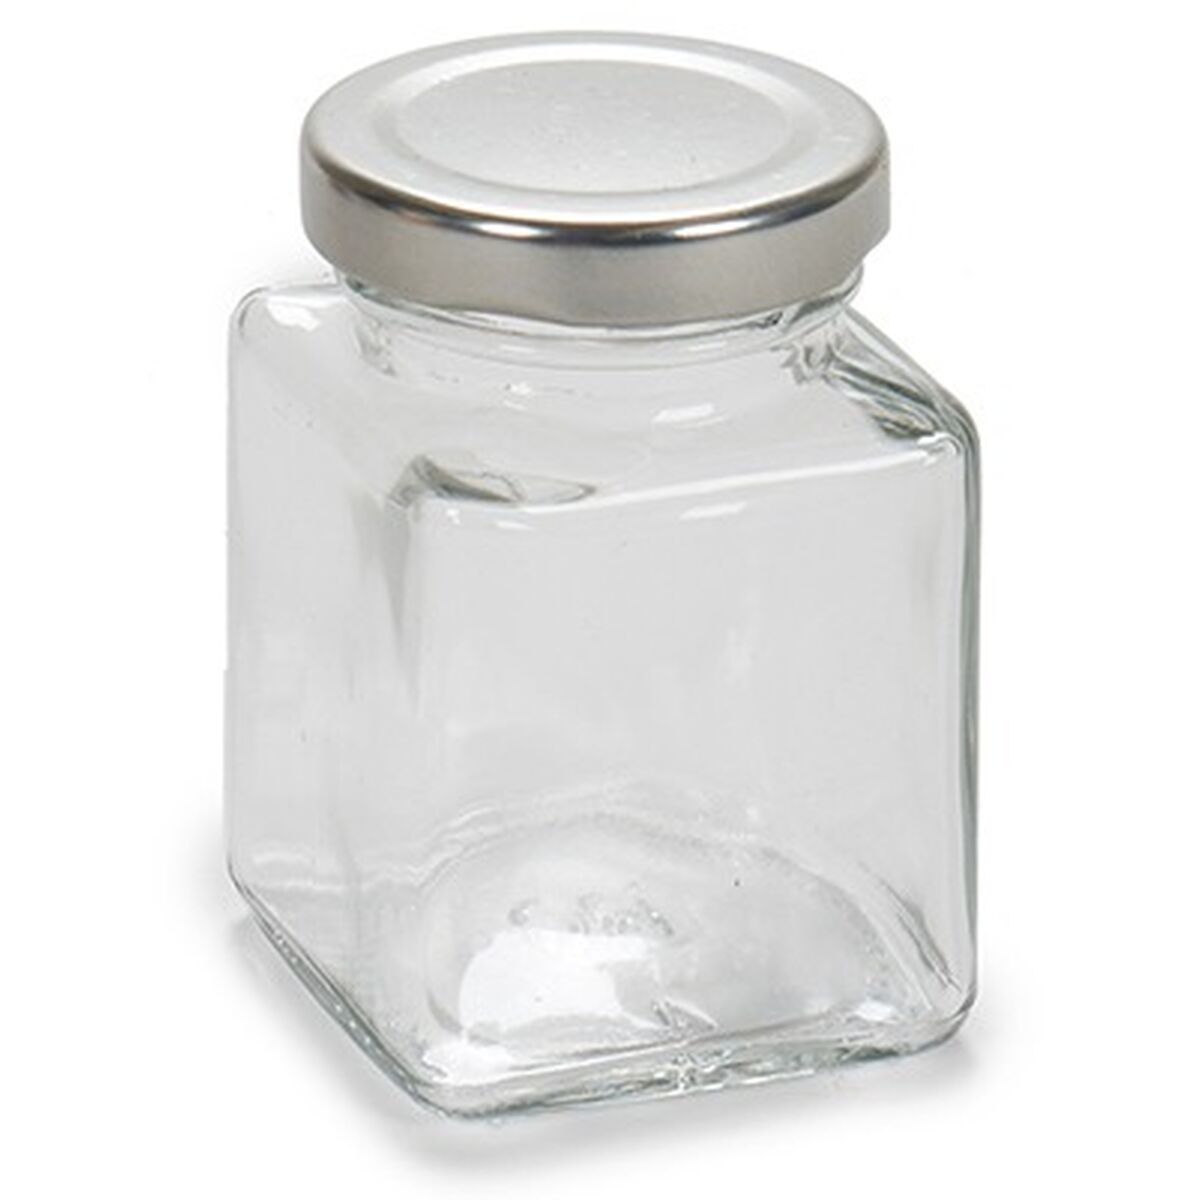 Blik Transparant Zilverkleurig Metaal Glas 100 ml 5,6 x 7,6 x 5,6 cm (6 Stuks)